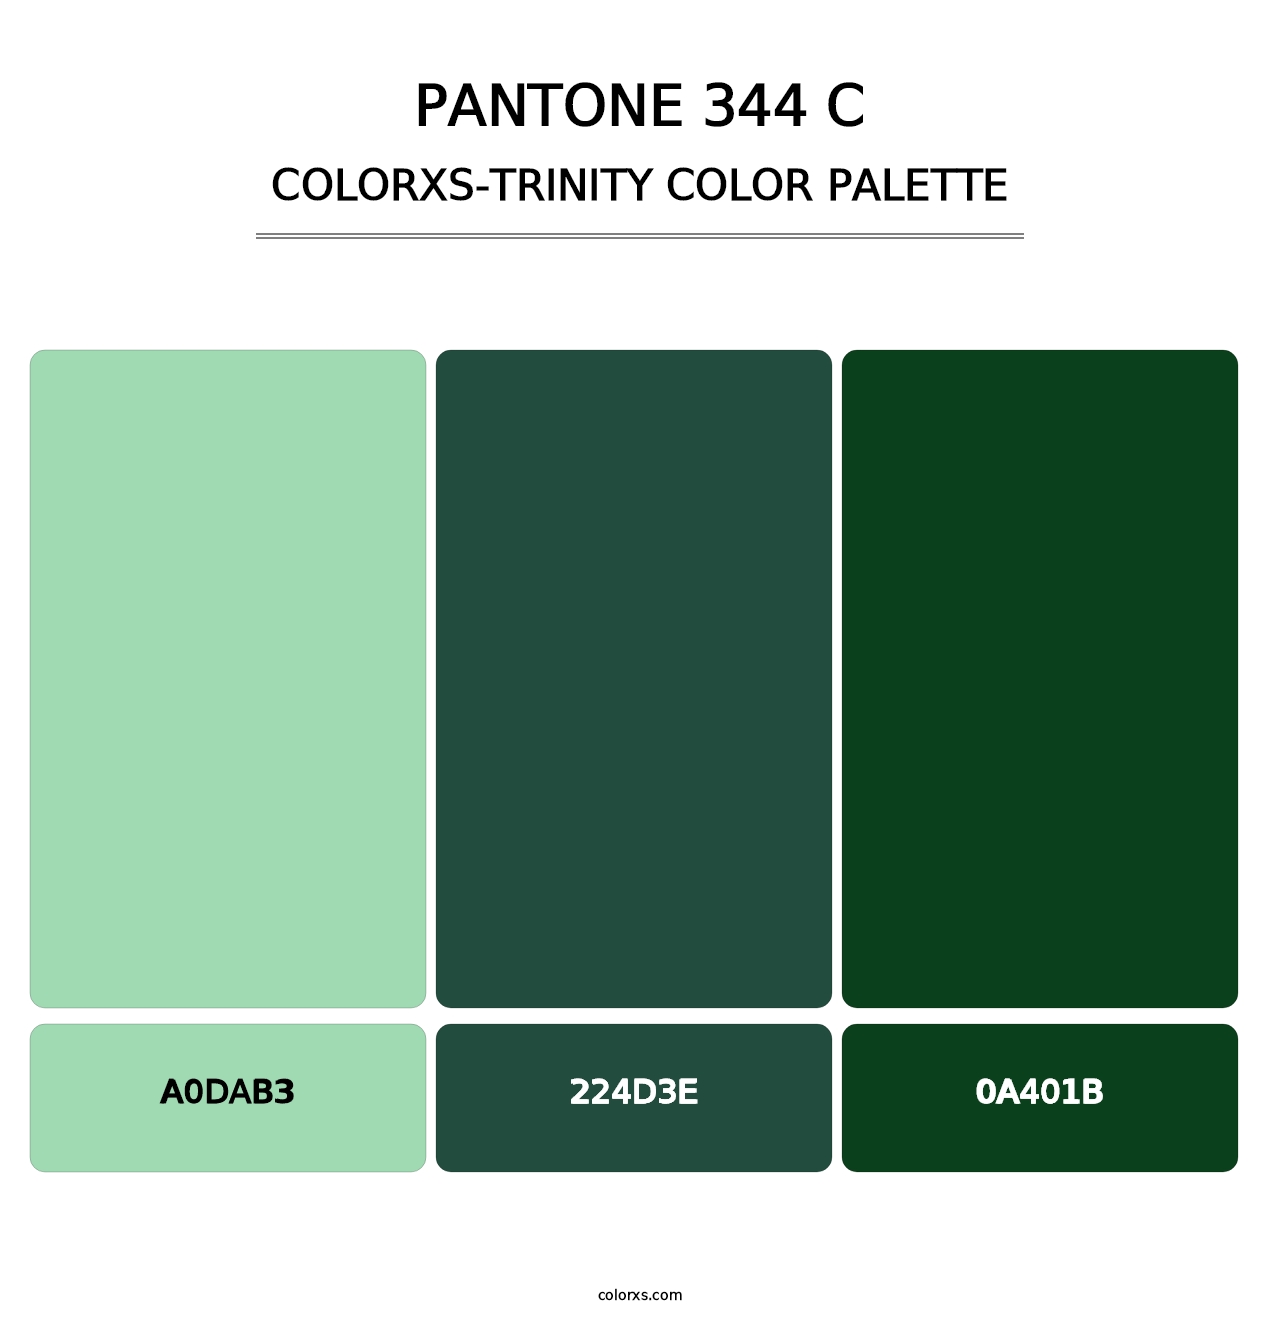 PANTONE 344 C - Colorxs Trinity Palette